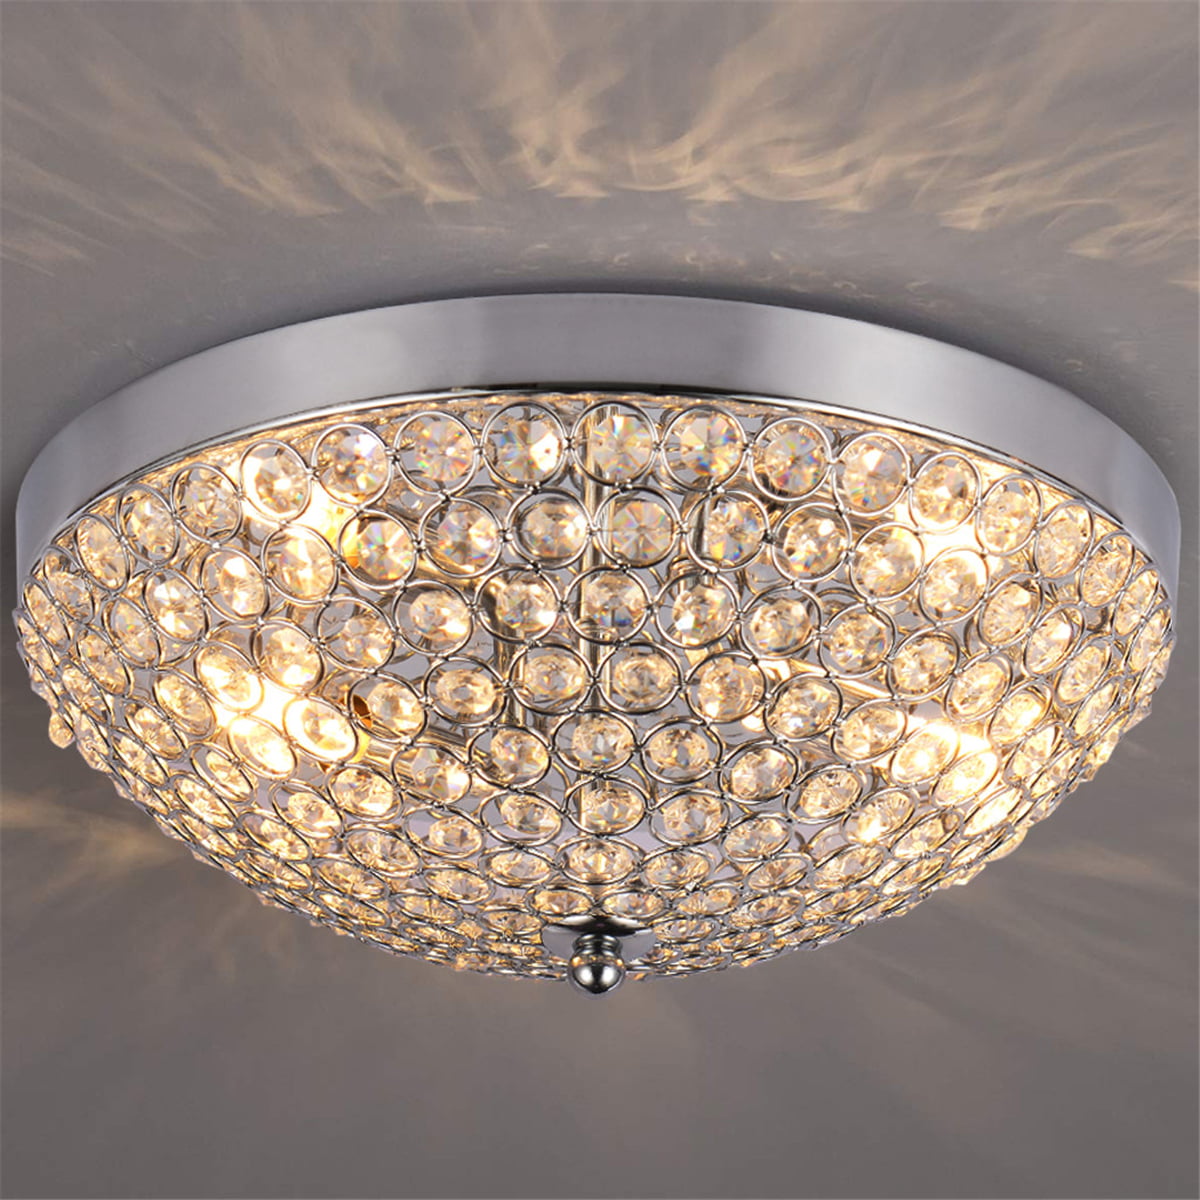 Mini Crystal Chandeliers Light Modern Flush Mount Crystal Ceiling Light Pendant Light for Bedroom Hallway Kitchen Dining Room 7.87 inch